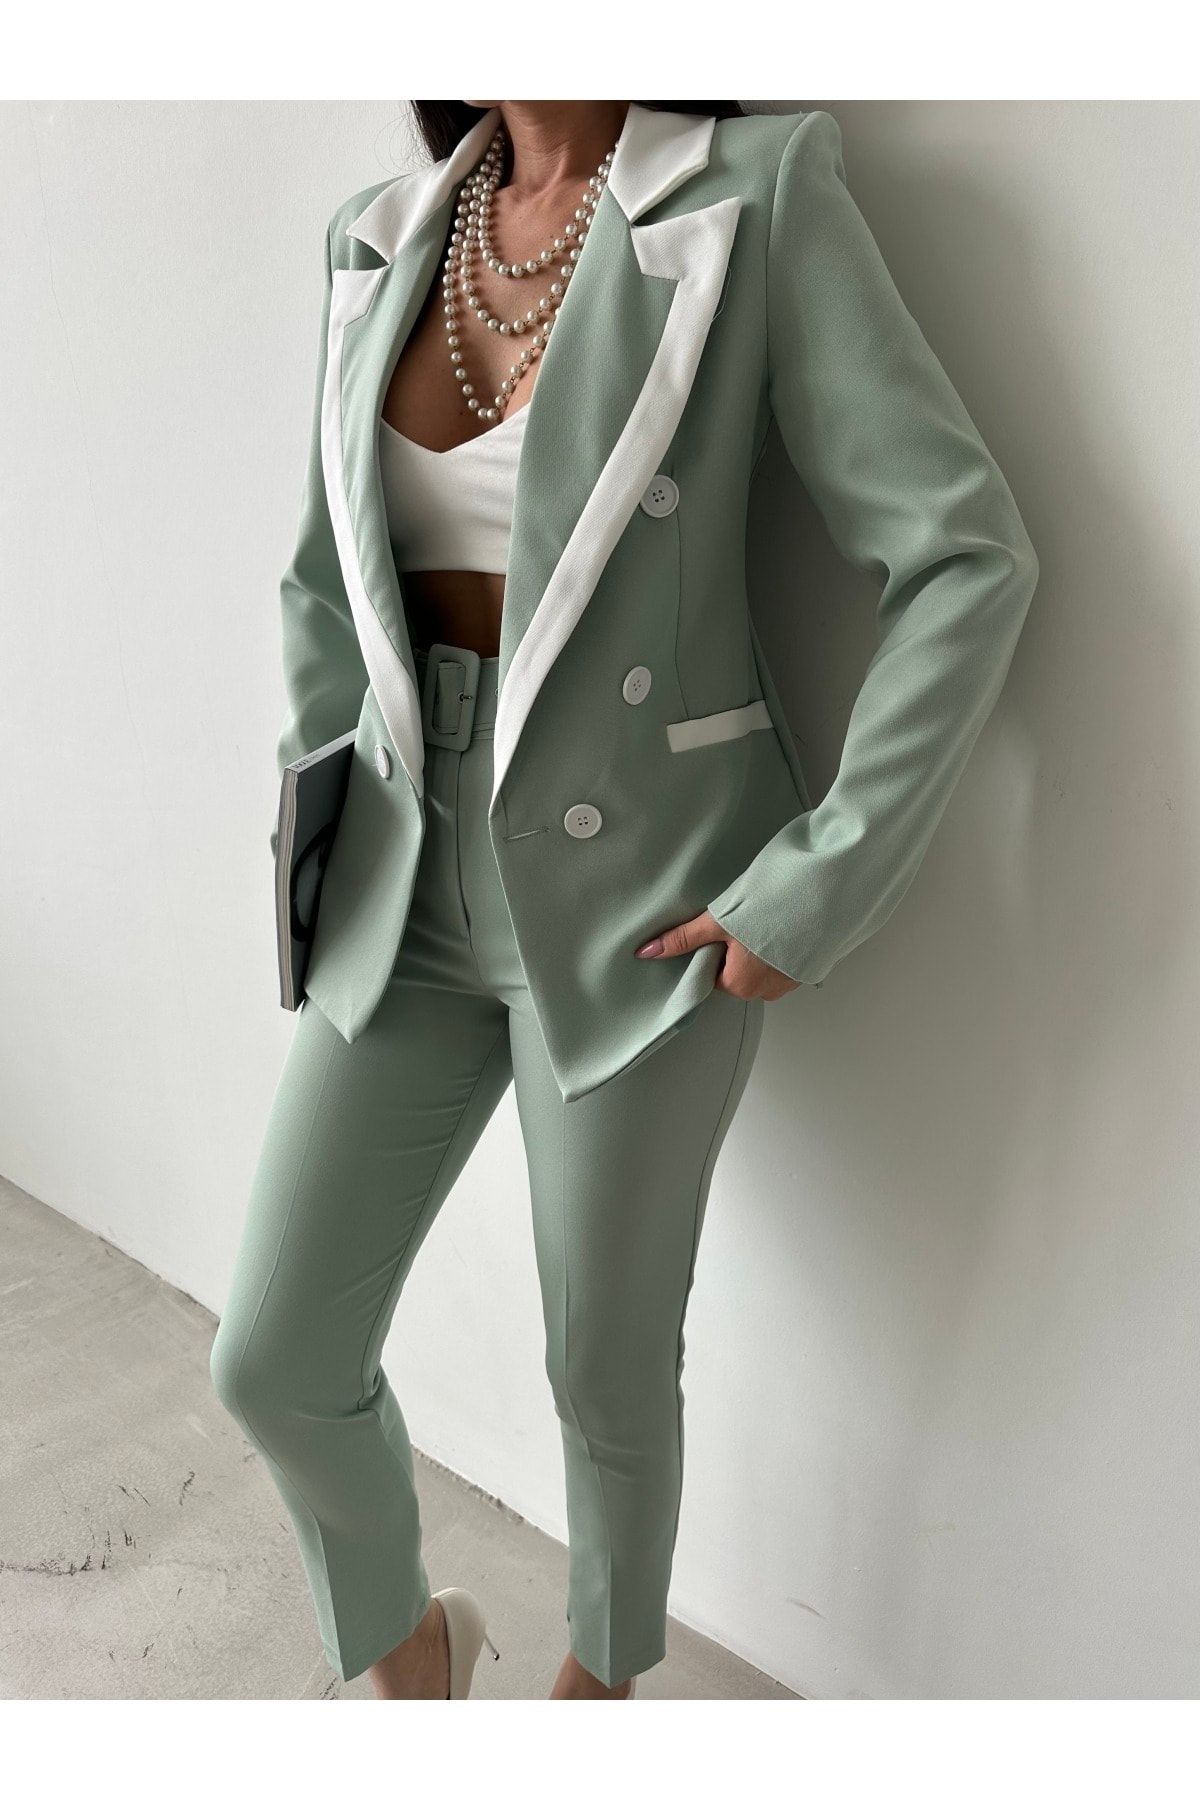 Rmz Style Şeritli Düğmeli Kruvaze Blazer Ceket Cepli Boru Paça Pantolon Takım Elbise